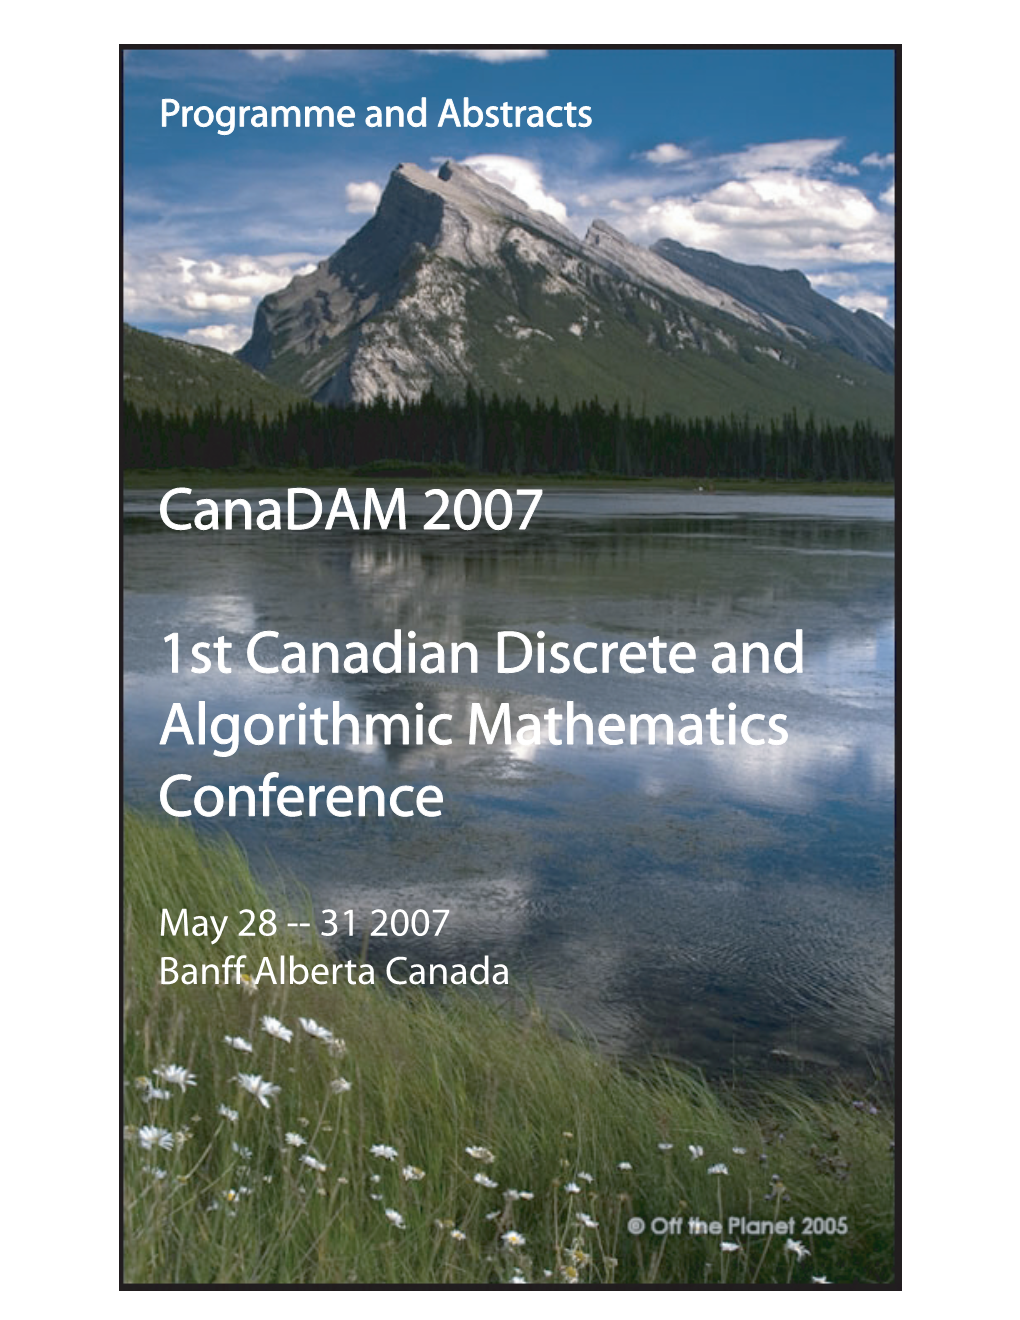 Canadam 2007 1St Canadian Discrete and Algorithmic